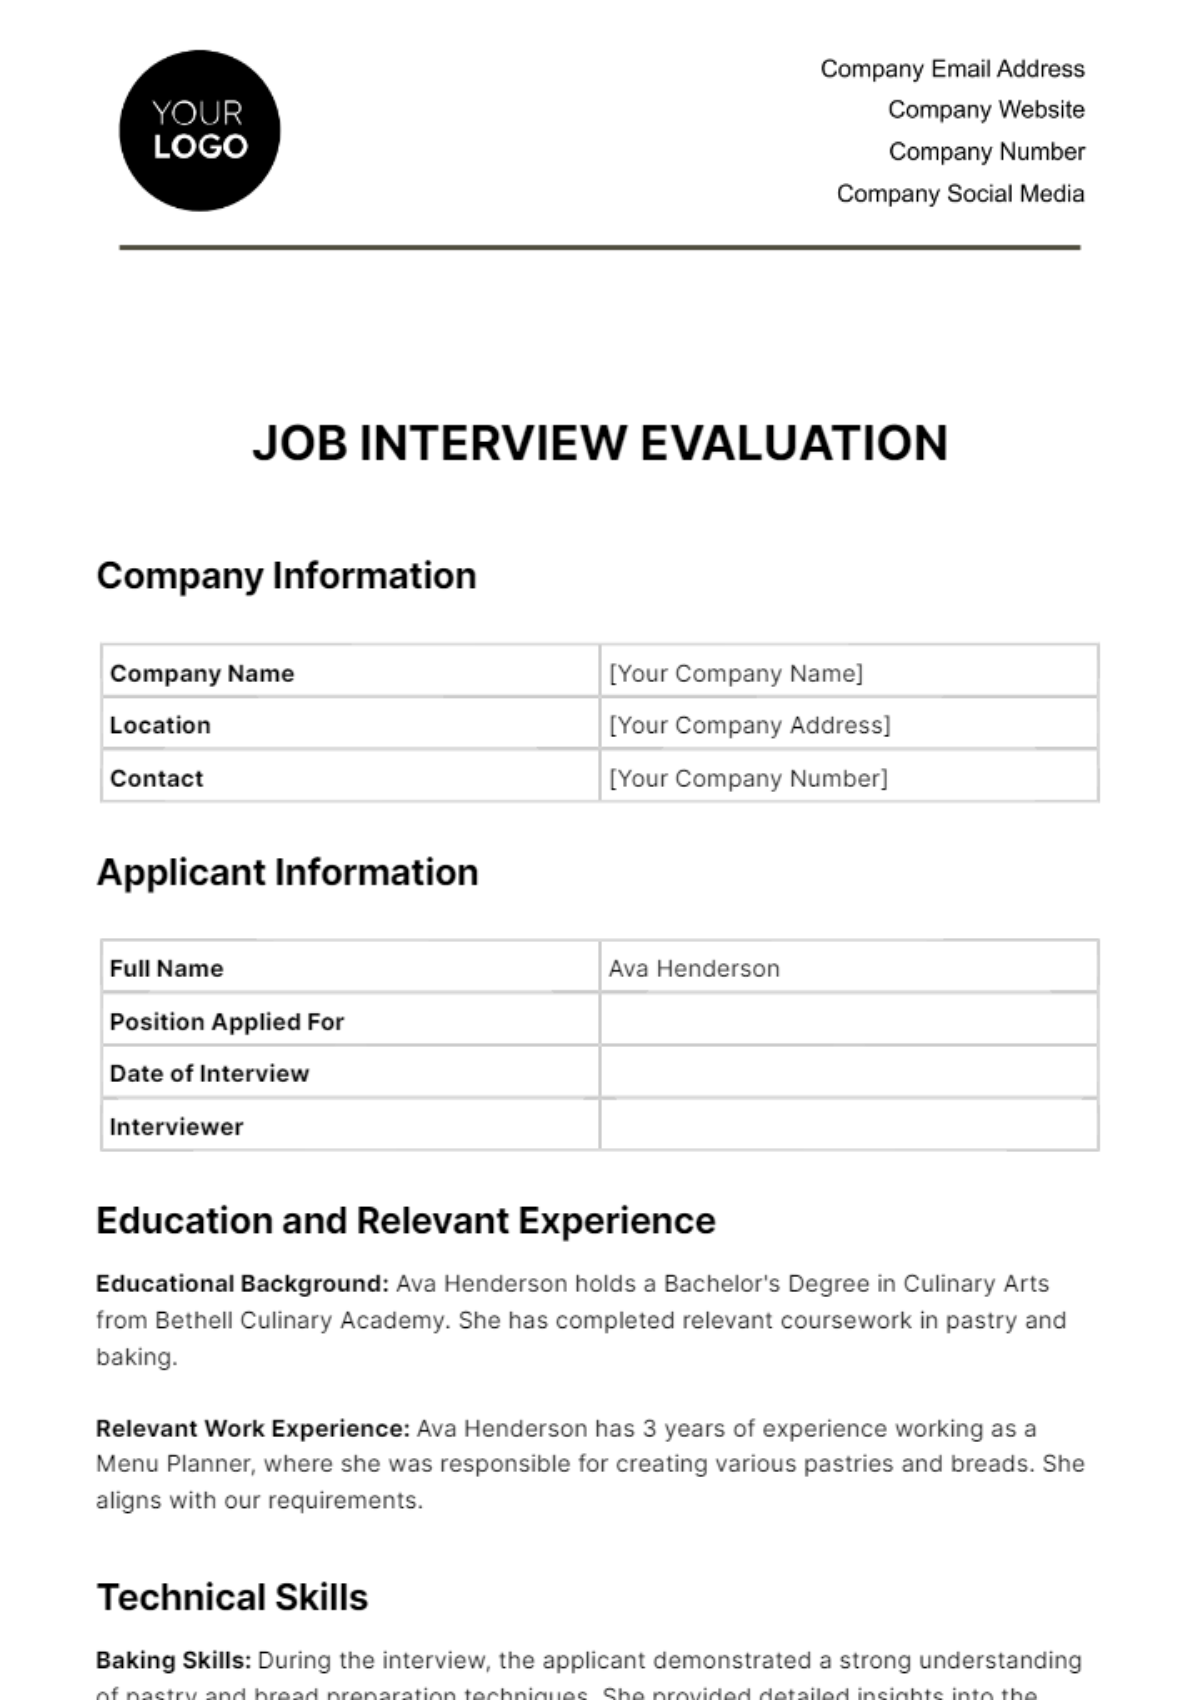 Job Interview Evaluation HR Template